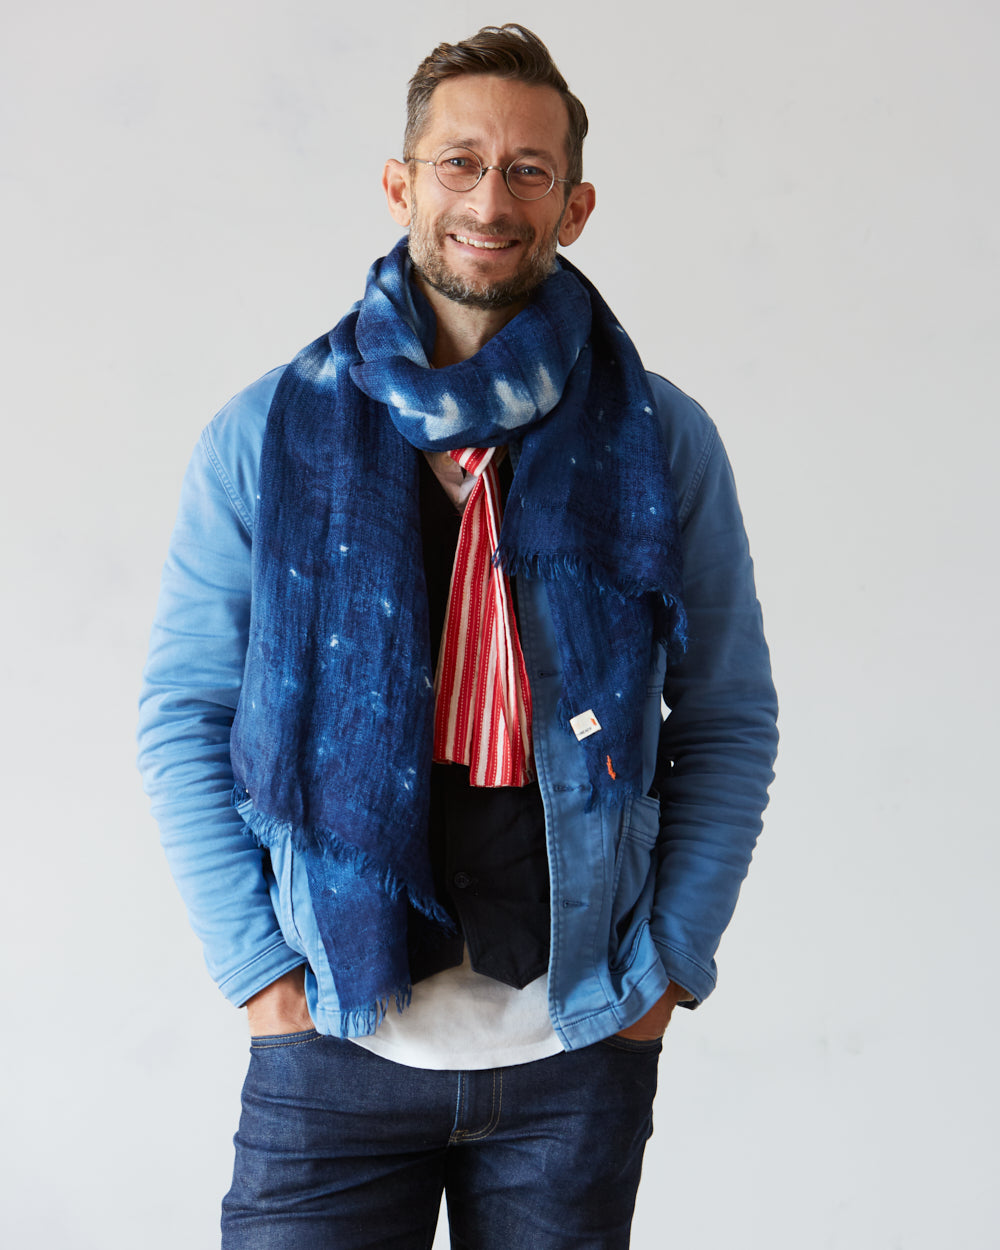 Mica – Indigofärgad sjal i linne. Numrerad upplaga